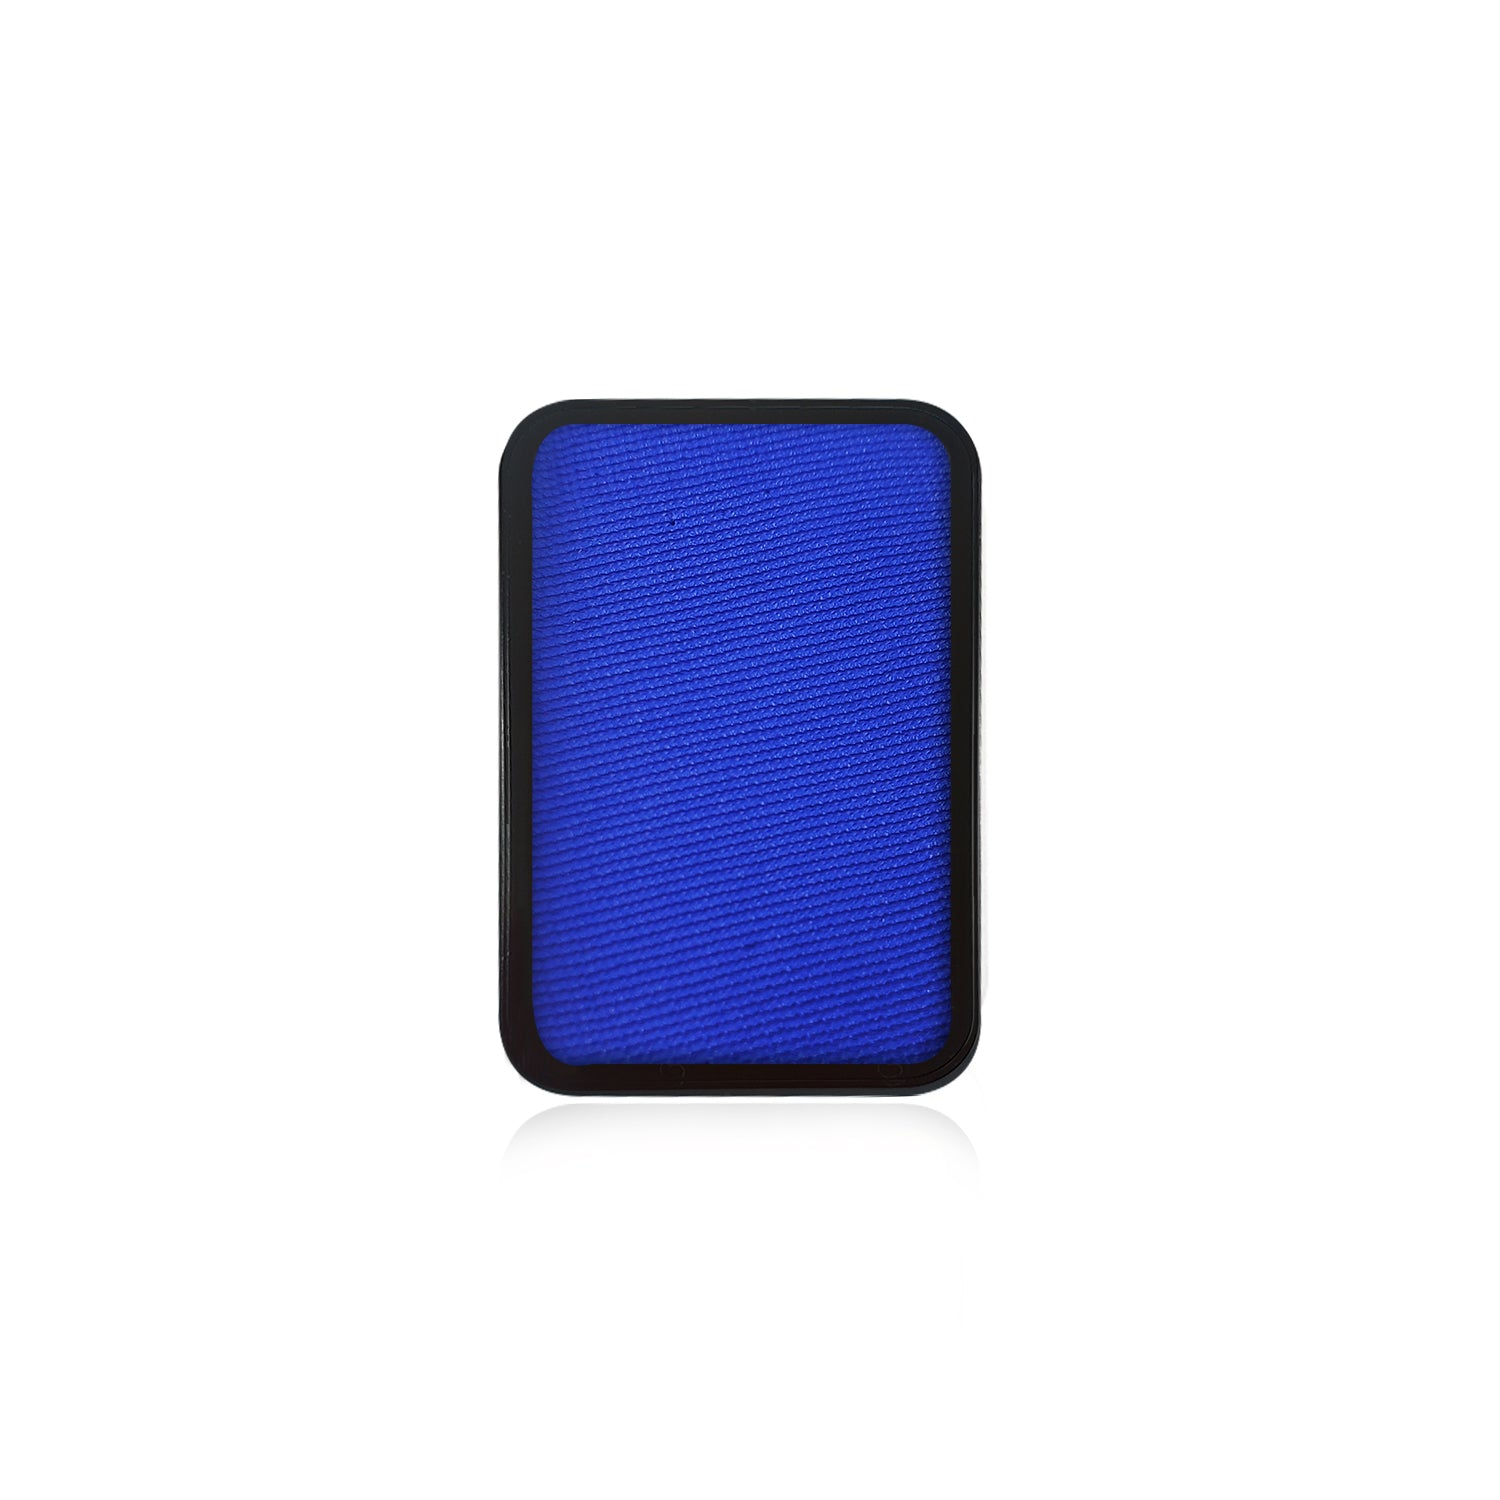 Kraze FX Face Paint Refill - Royal Blue (10 gm)